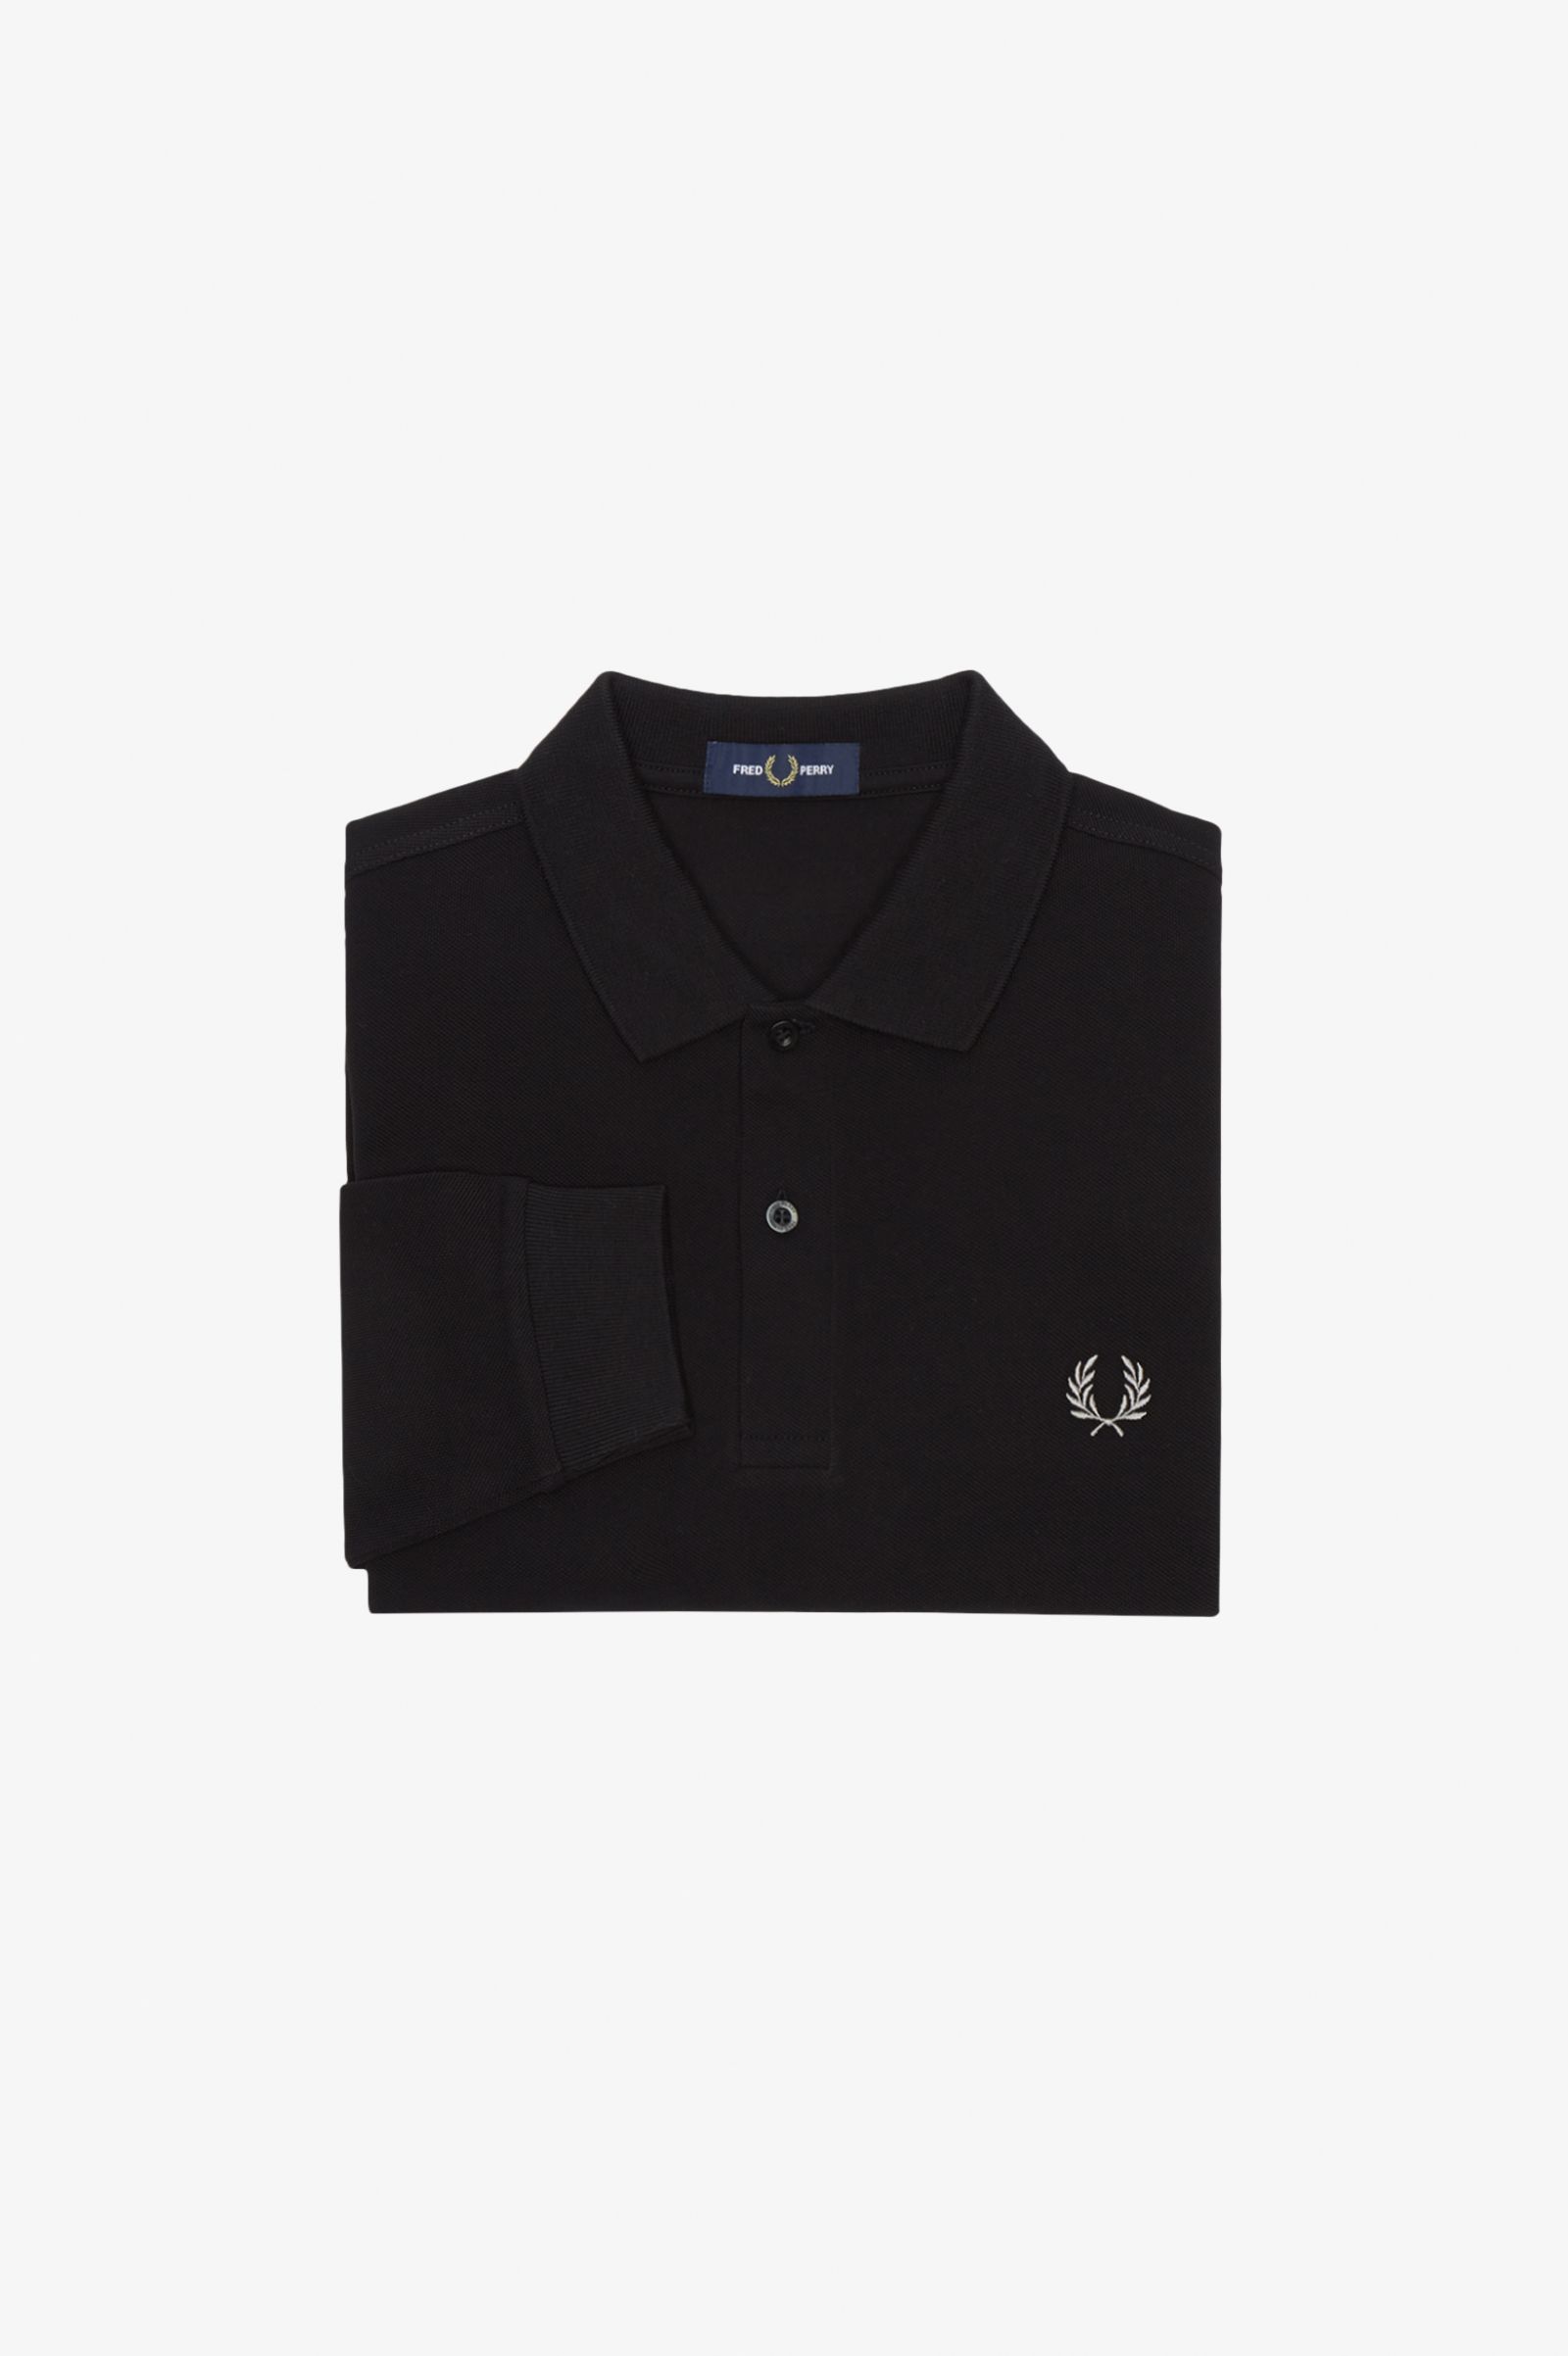 M6006 - Black / Chrome | The Fred Perry Shirt | Men's Short & Long ...